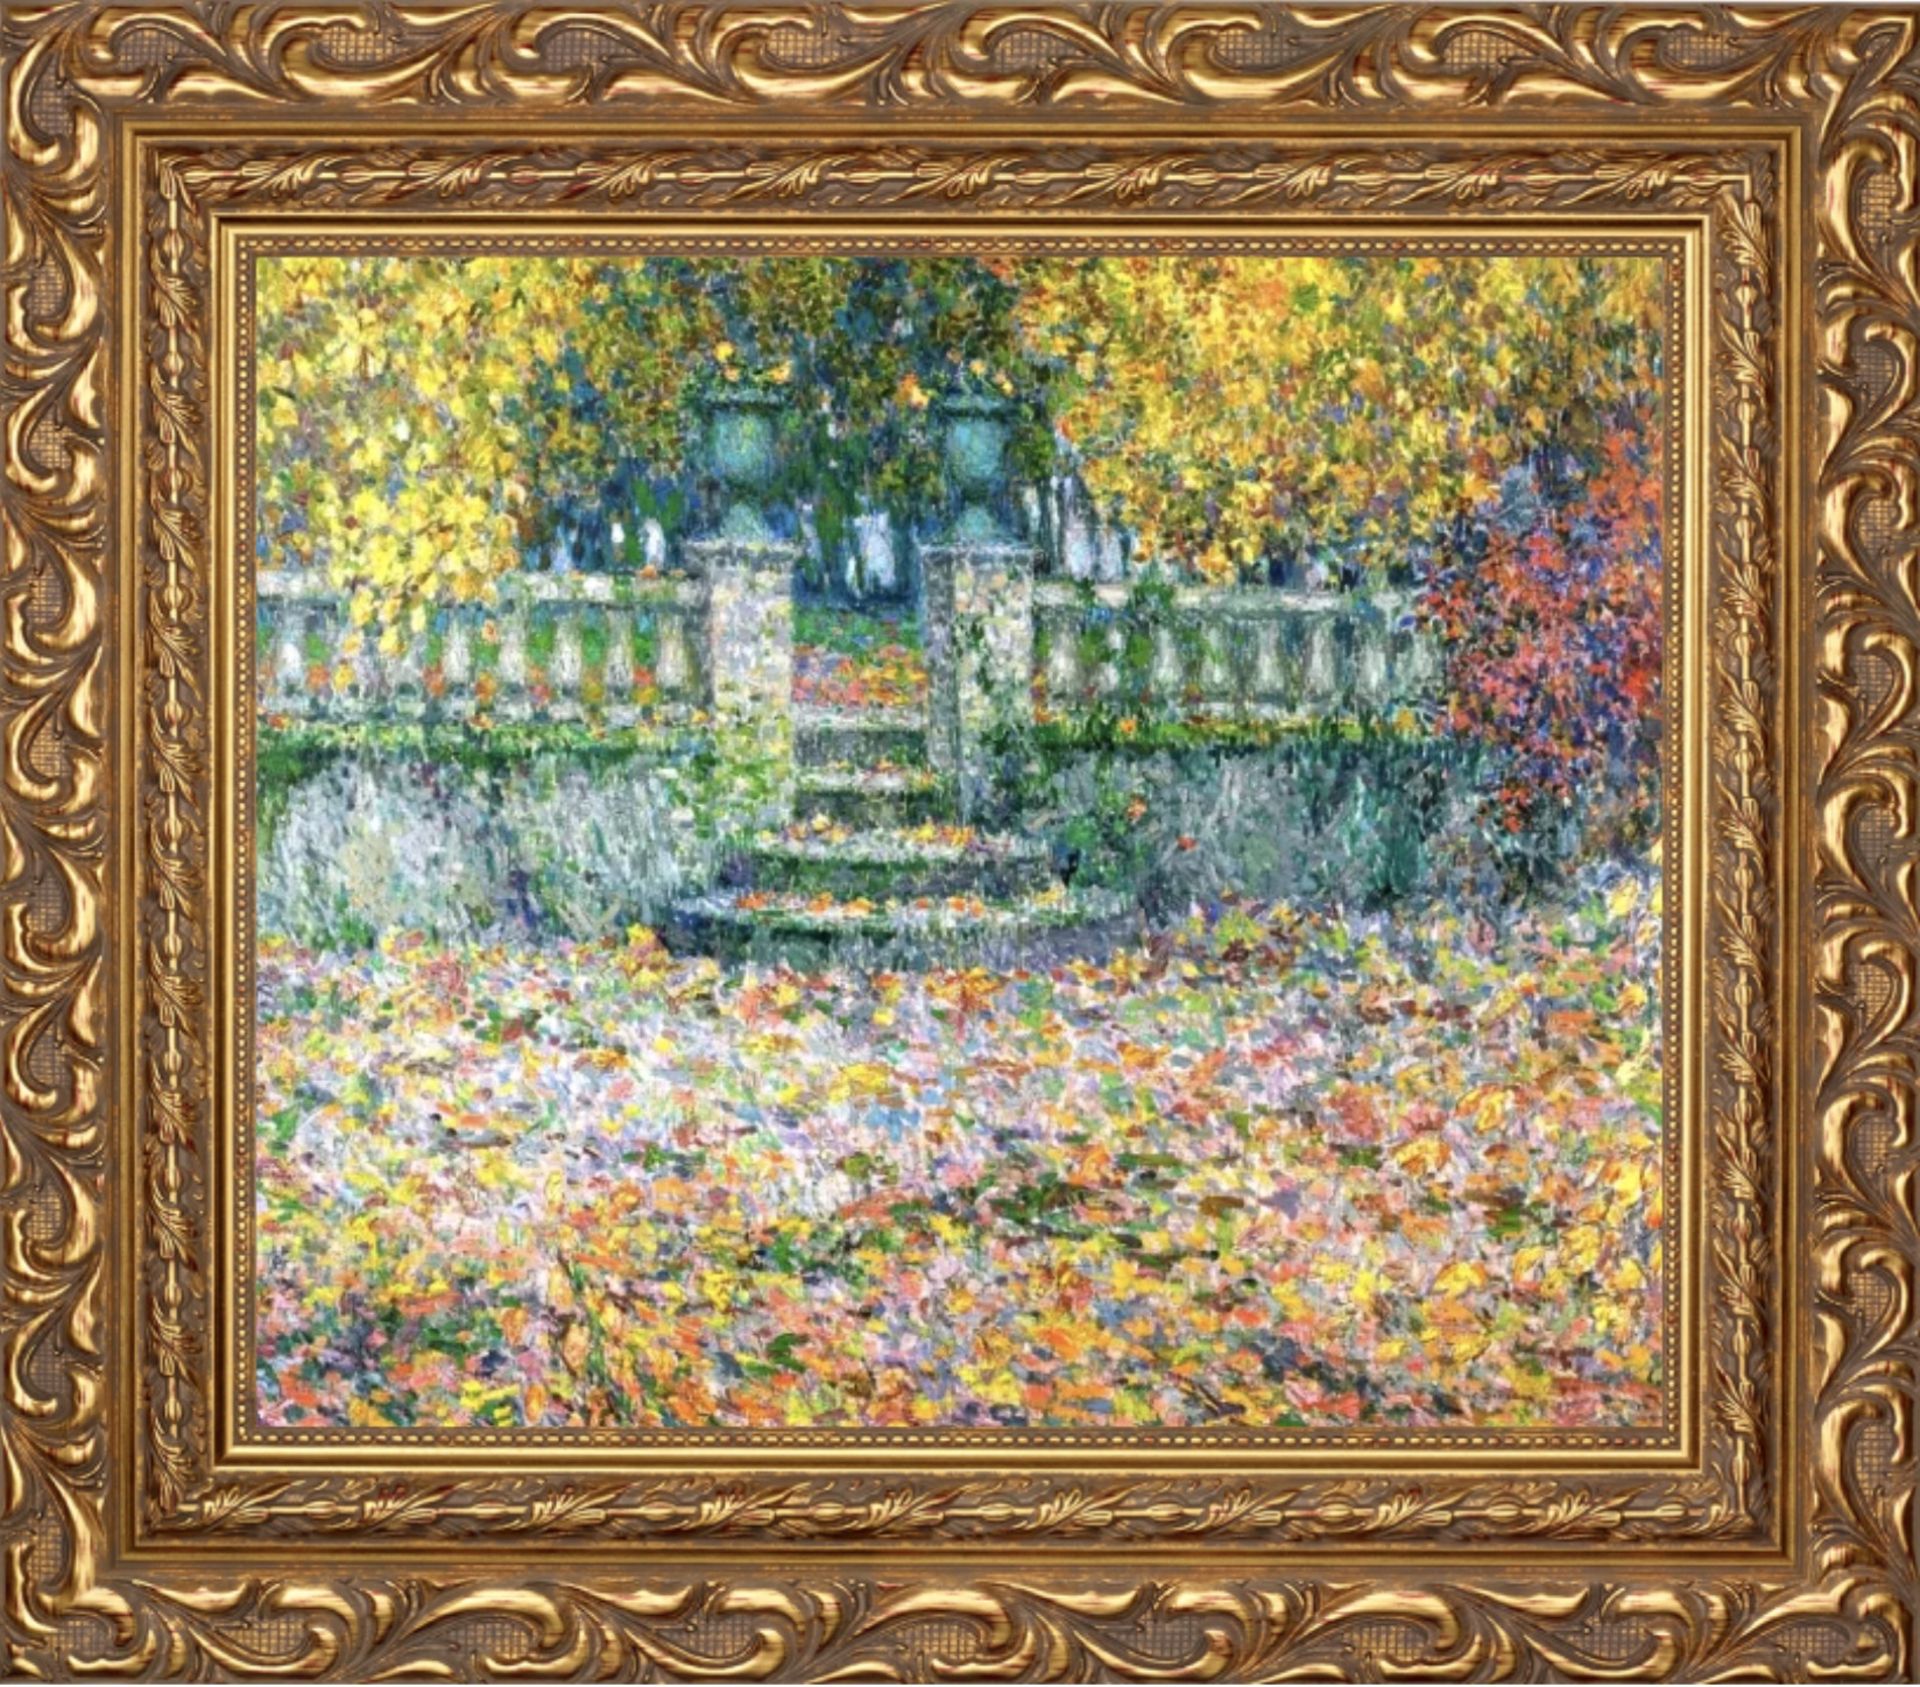 Henri Le Sidaner "The Terrace, Autumn, Gerberoy" Painting